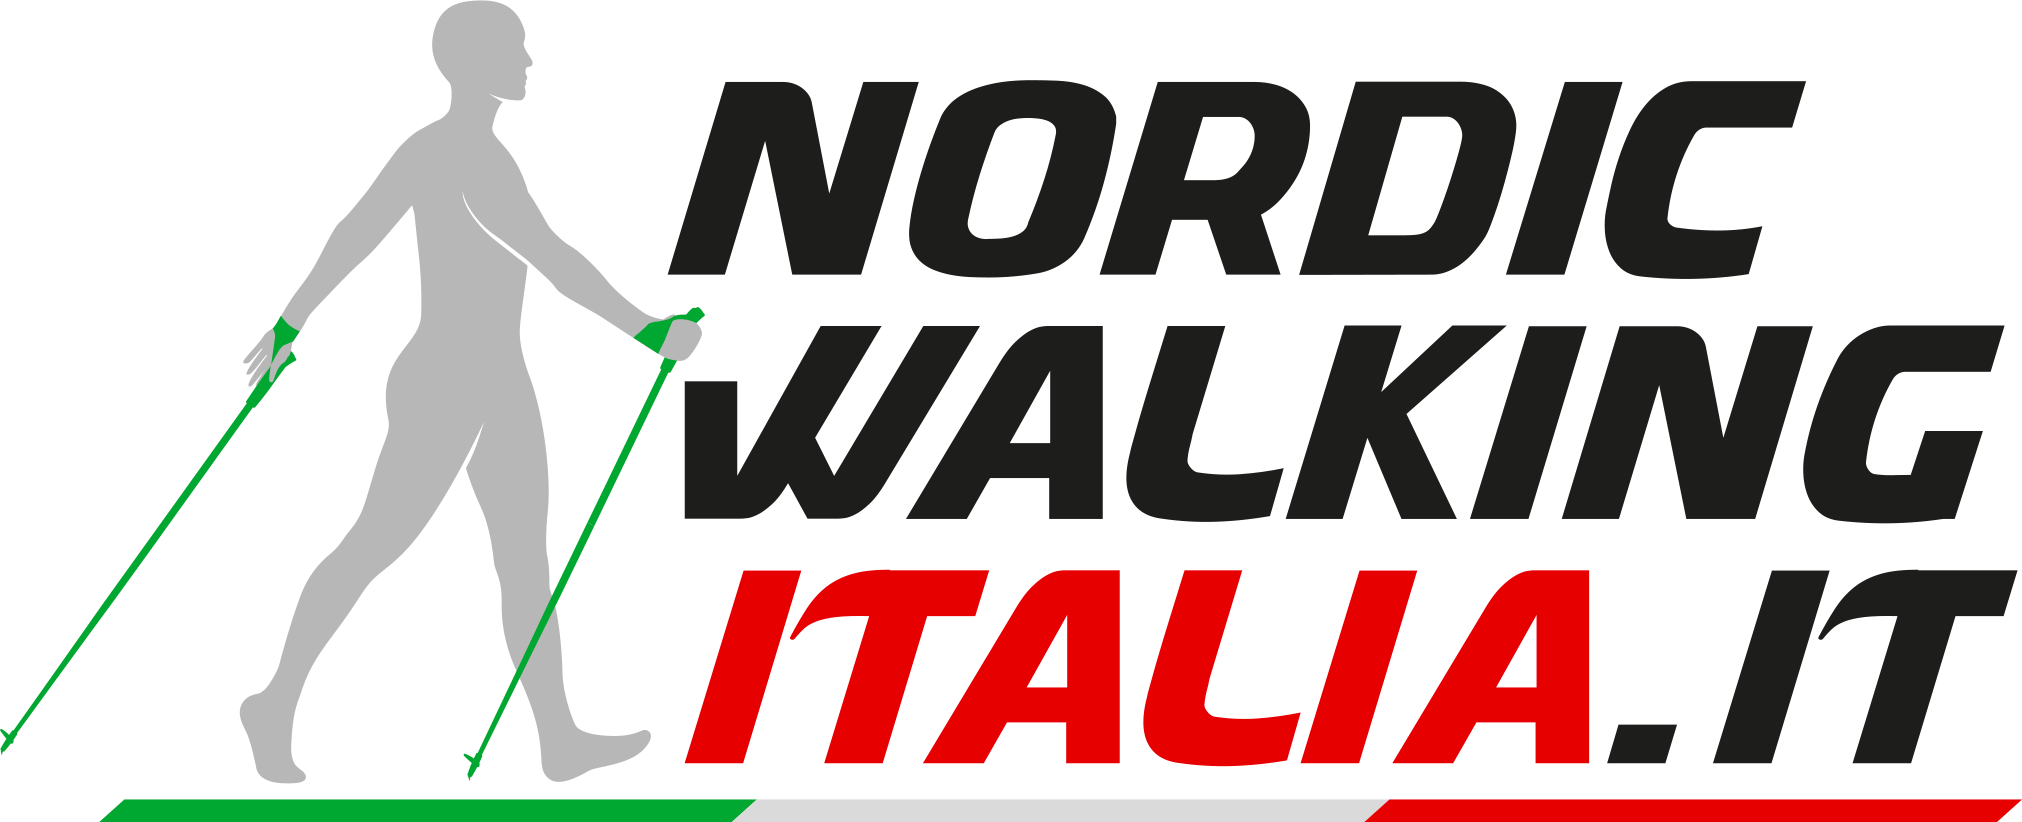 Logo Nordic Walking Italia